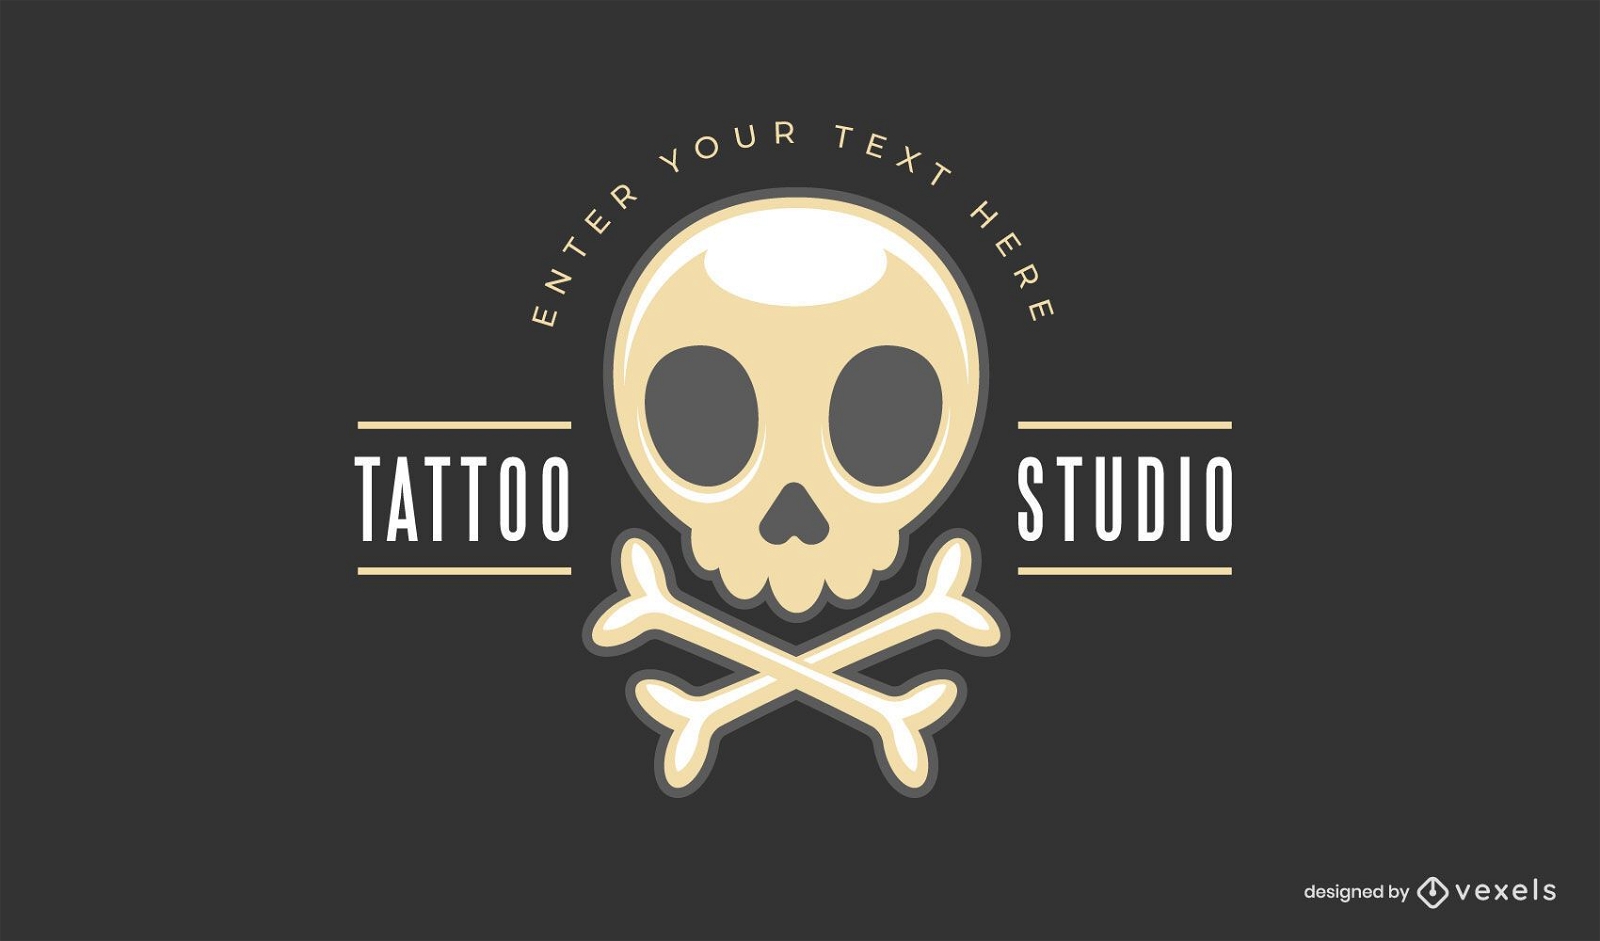 Tattoo studio logo template